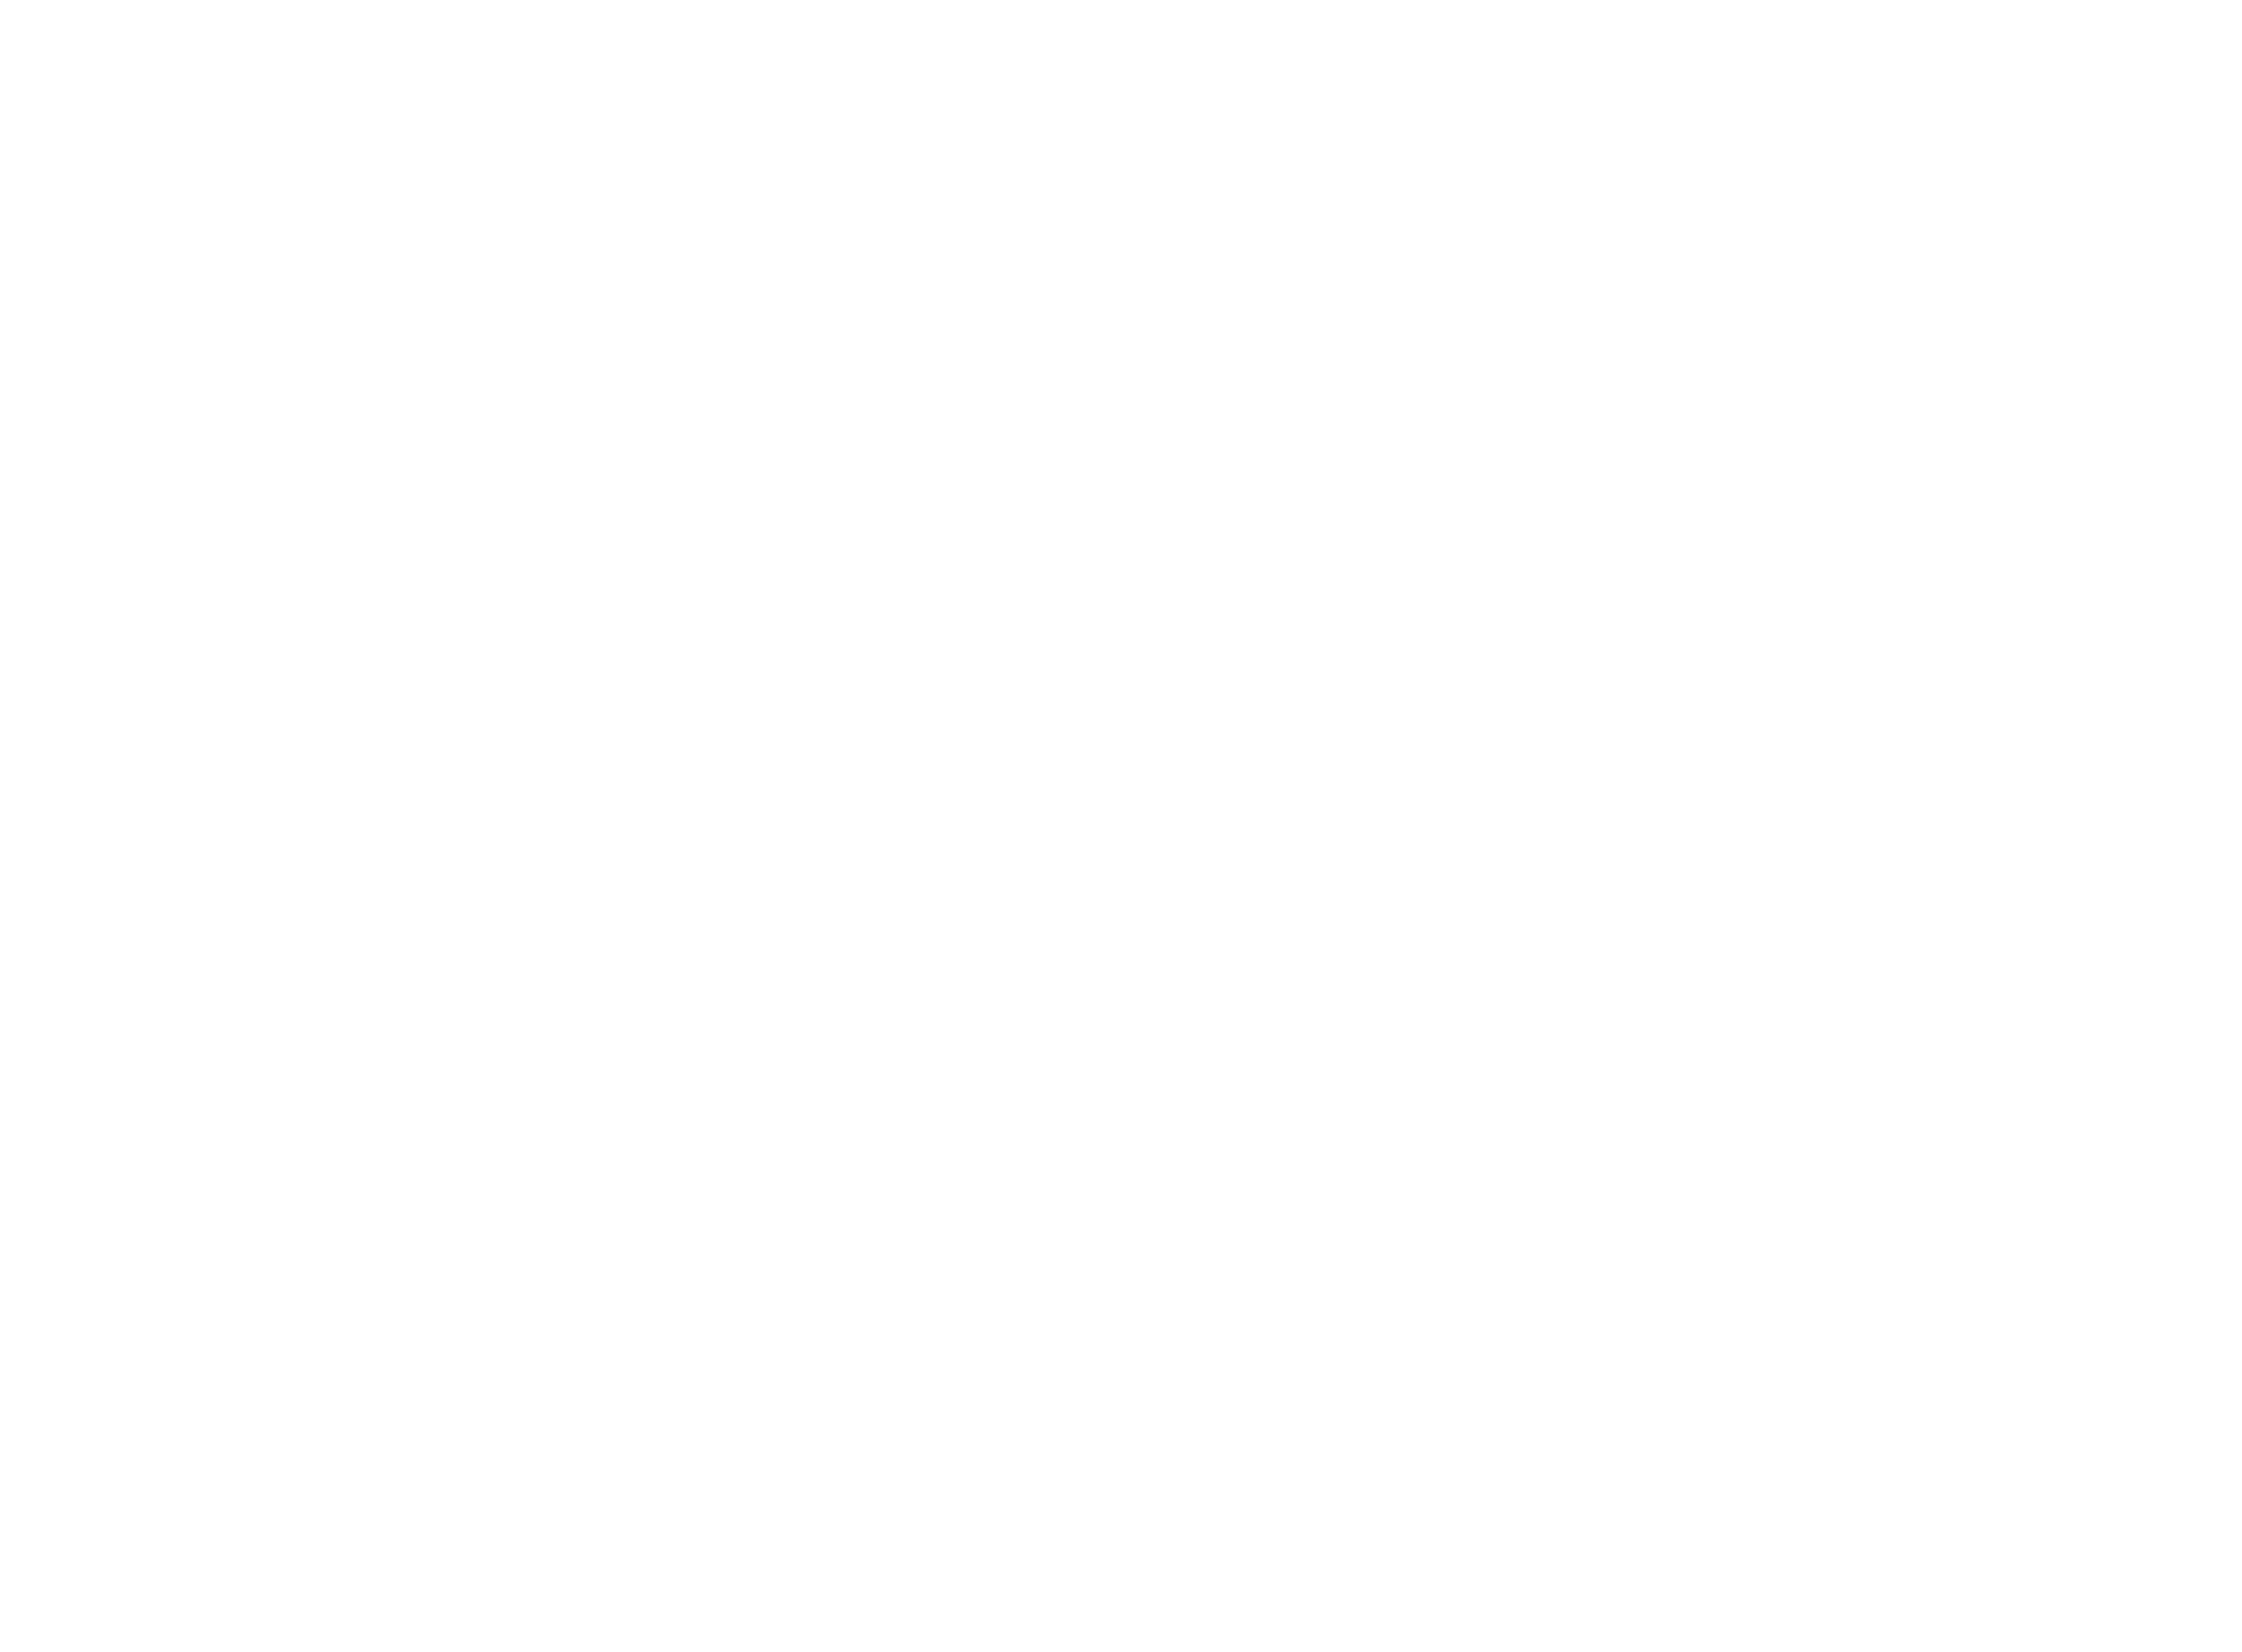 Hannu Ikonen Photography